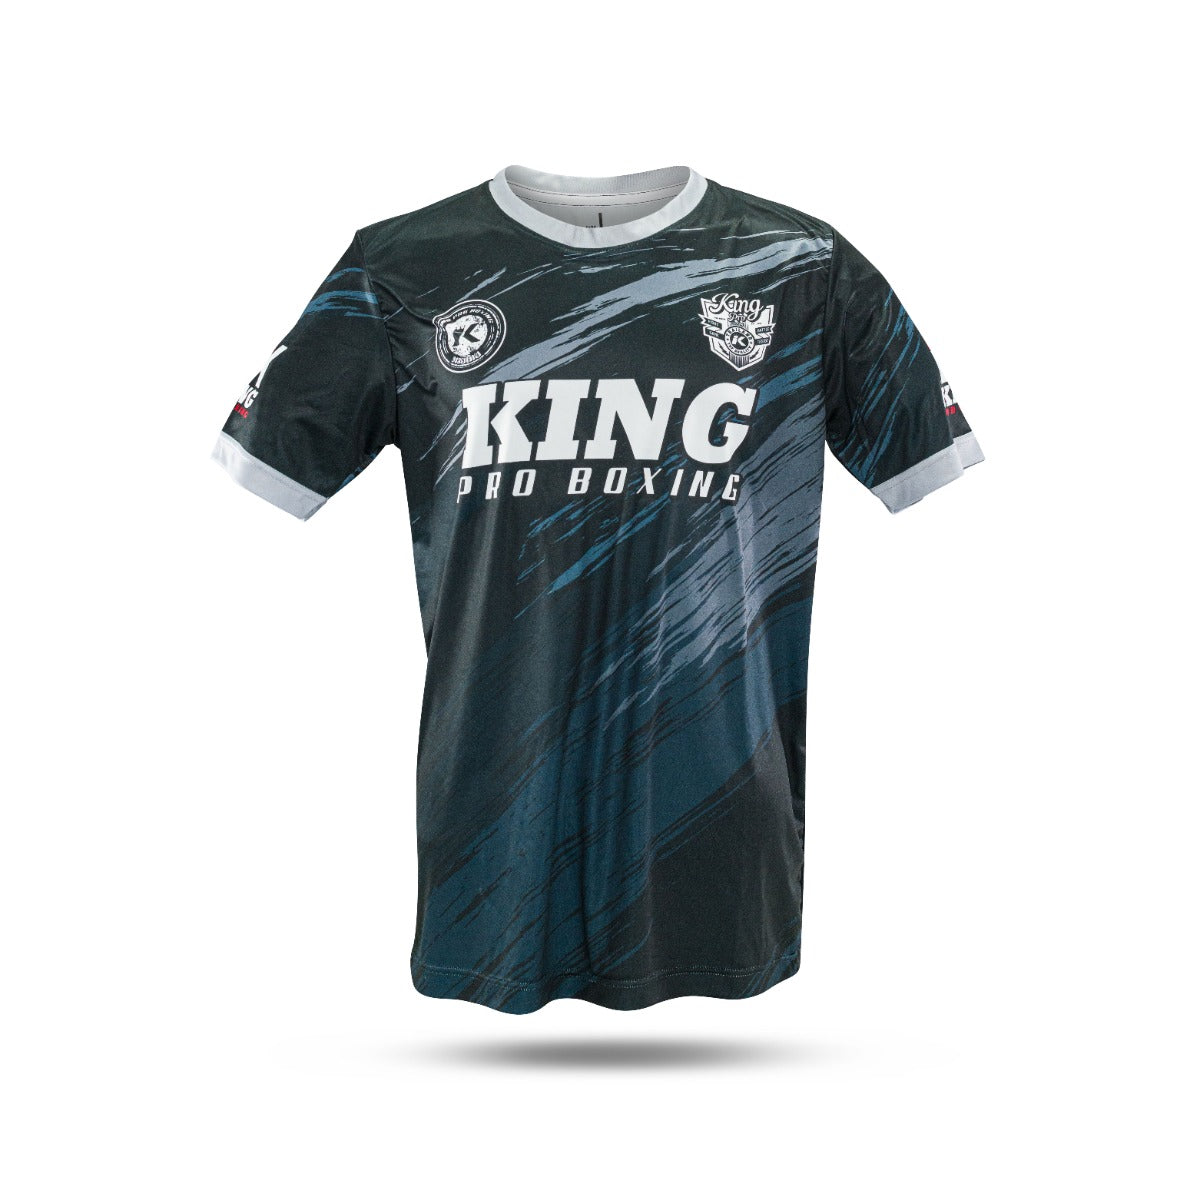 King PRO Boxing T-shirt - STORM TEE 1